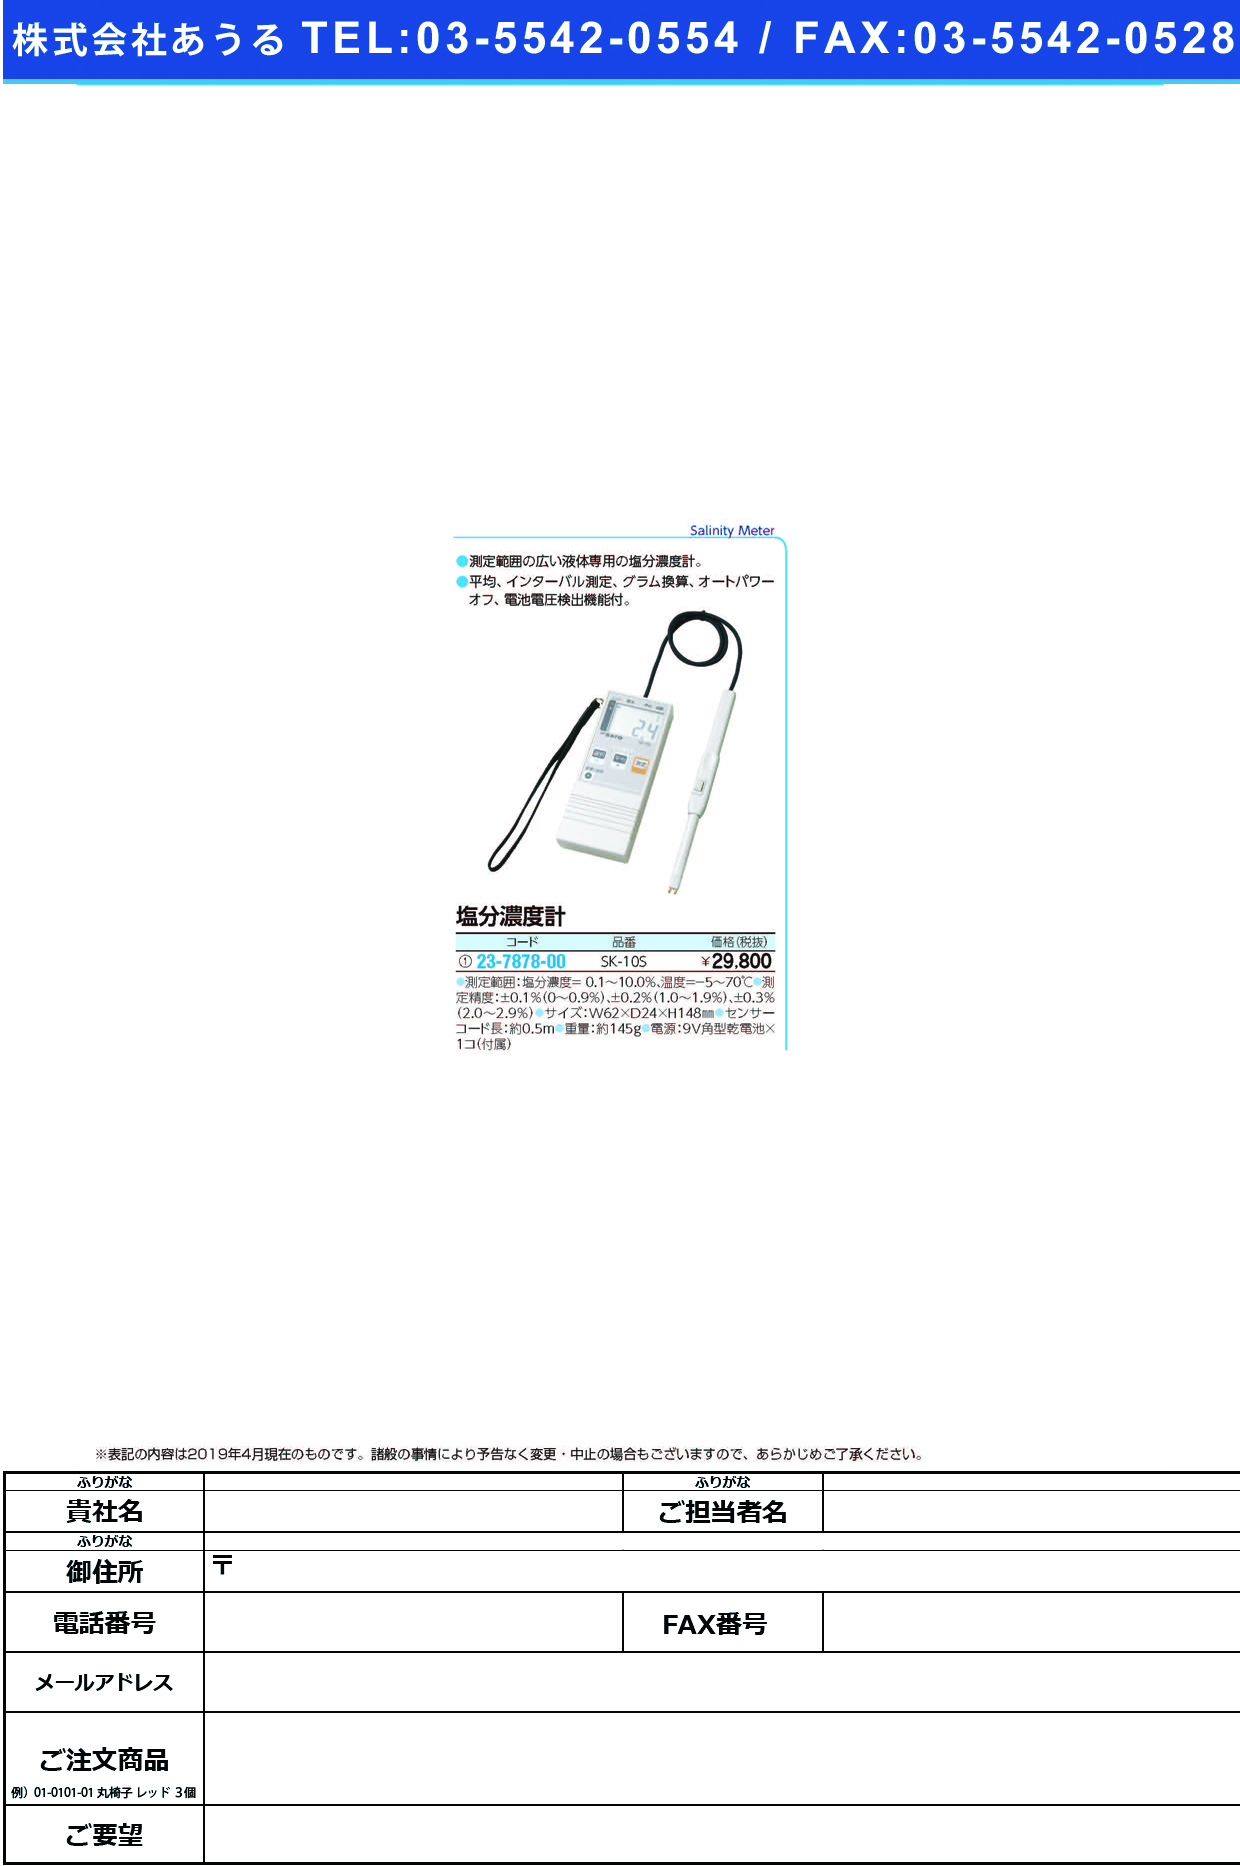 (23-7878-00)塩分濃度計 SK-10S ｴﾝﾌﾞﾝﾉｳﾄﾞｹｲ【1台単位】【2019年カタログ商品】